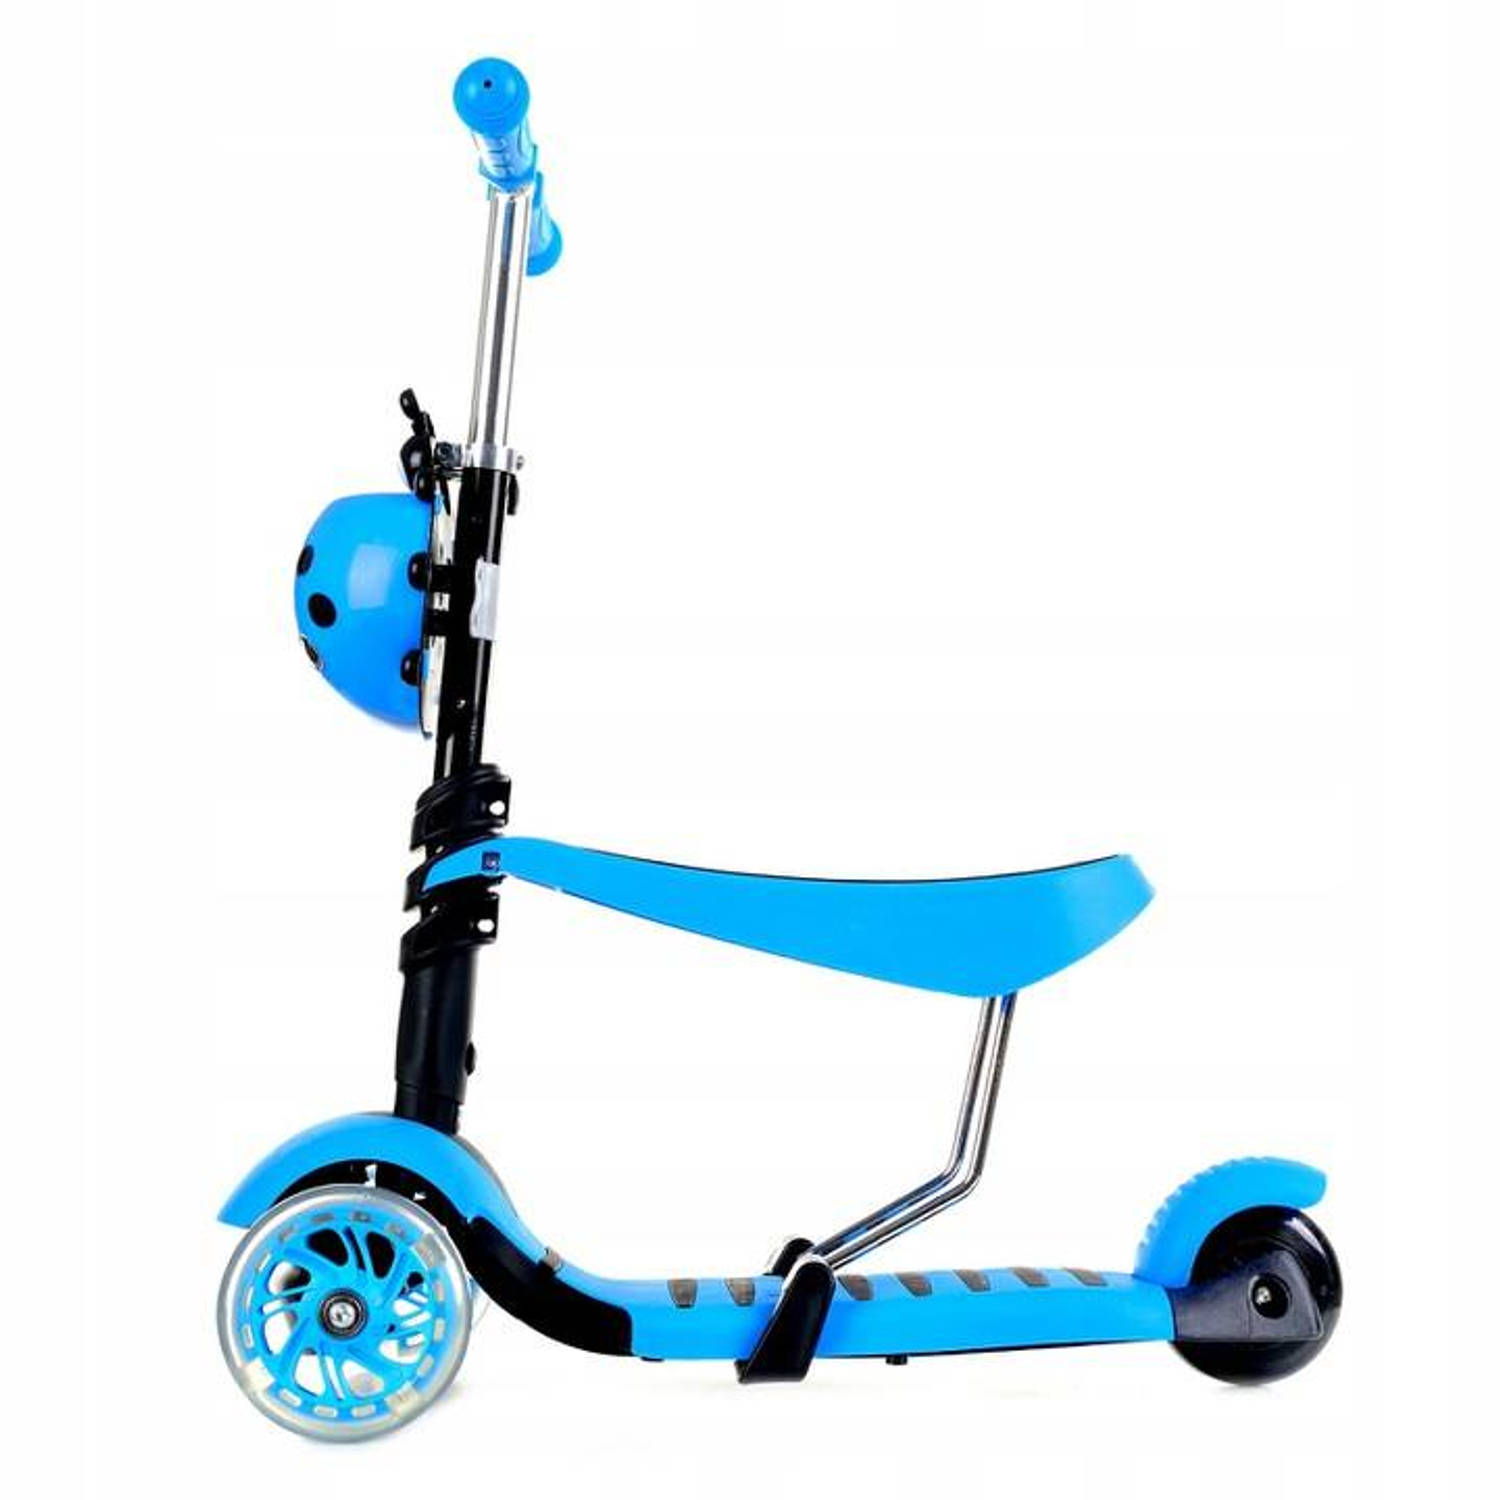 HA-MA TOOLS Mini Scooter - Zadel Step Met 3 Wielen - Driewieler - LED Wielen - Blauw